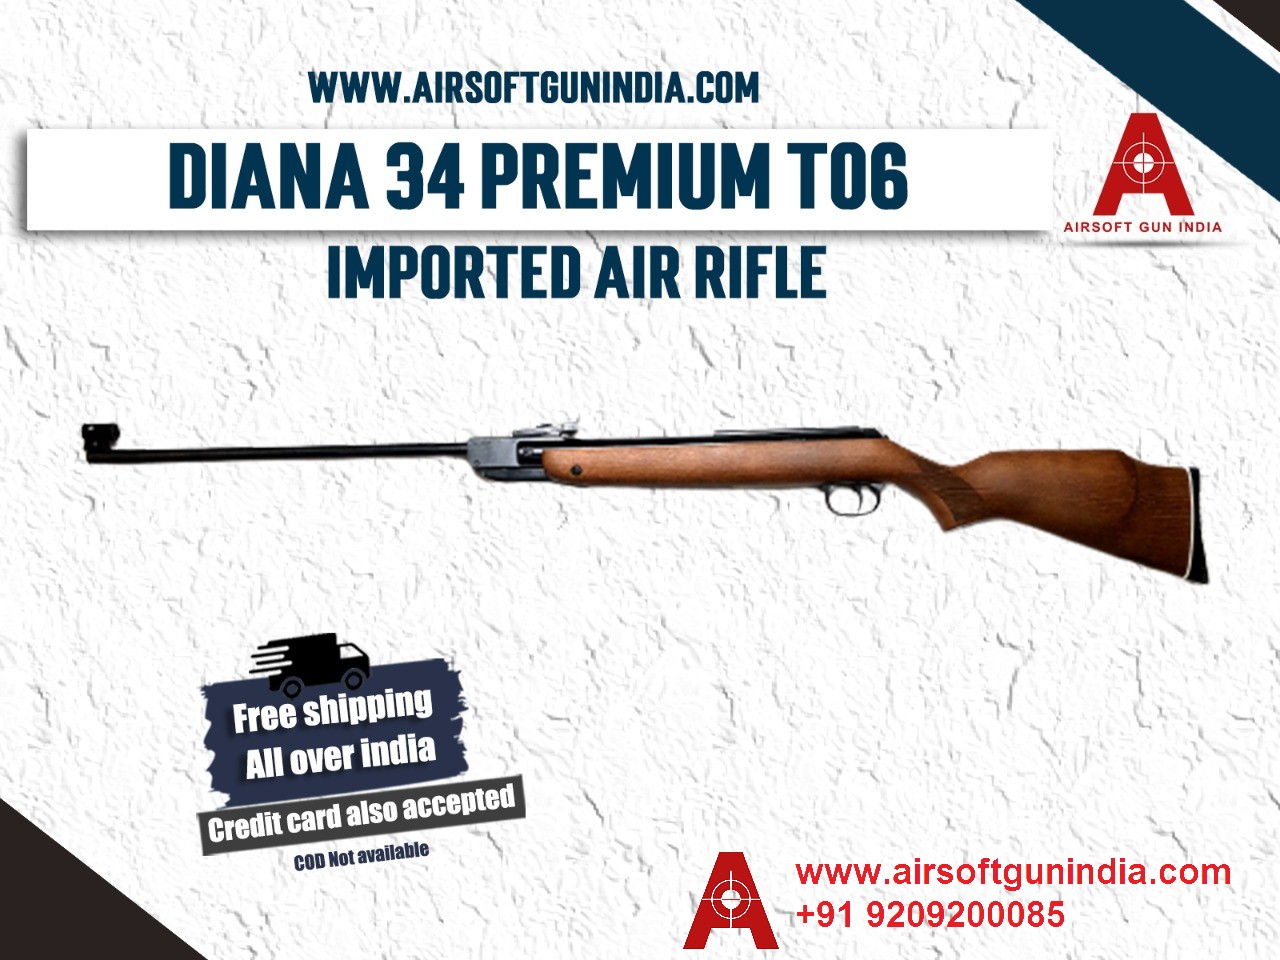 Diana 34 Premium T06 Cal. 177 By Airsoft Gun India